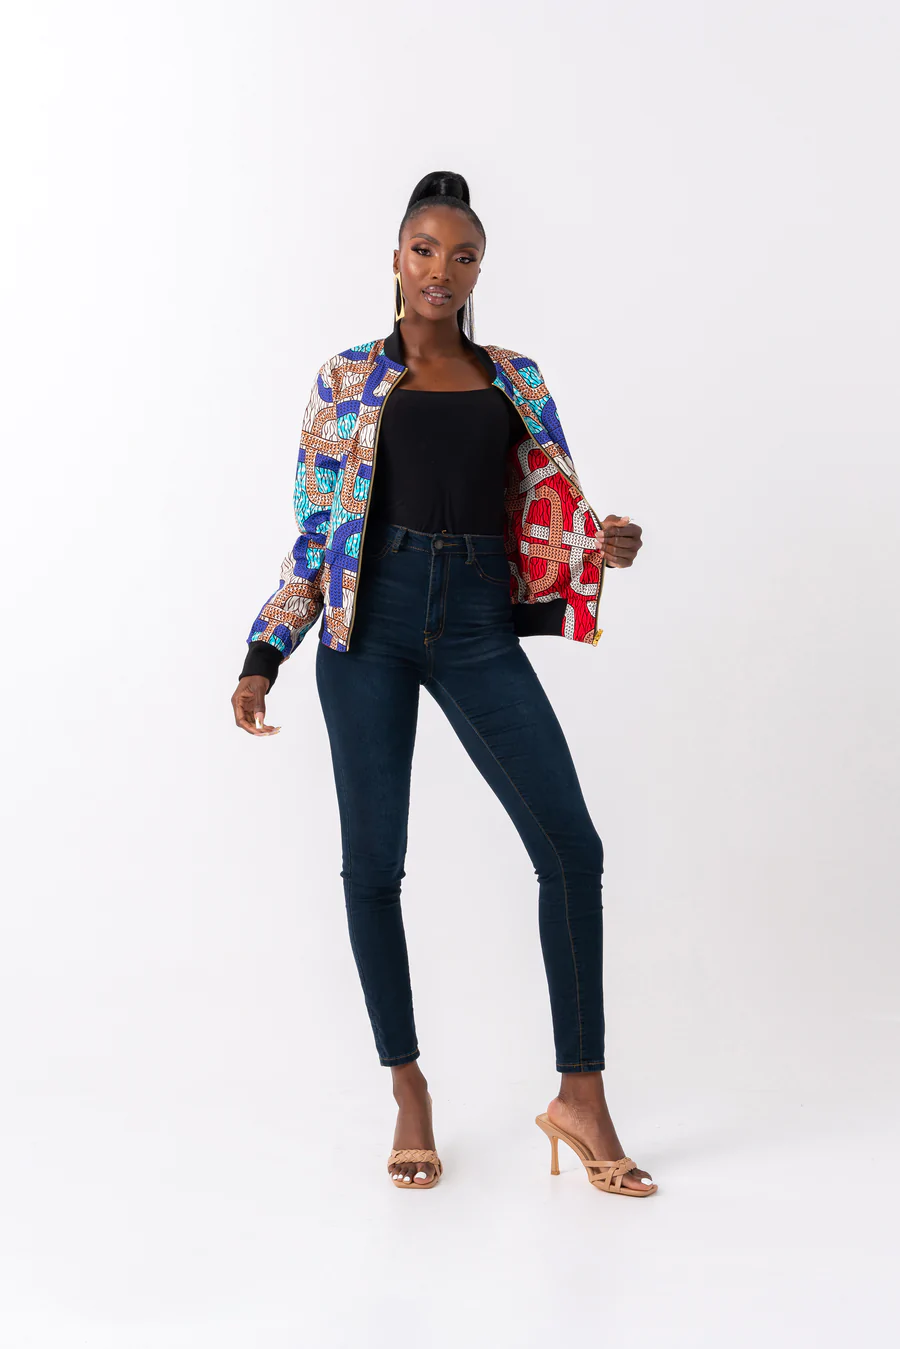 This Season’s Best African Fashion Styles From Ofuure - Jamila Kyari